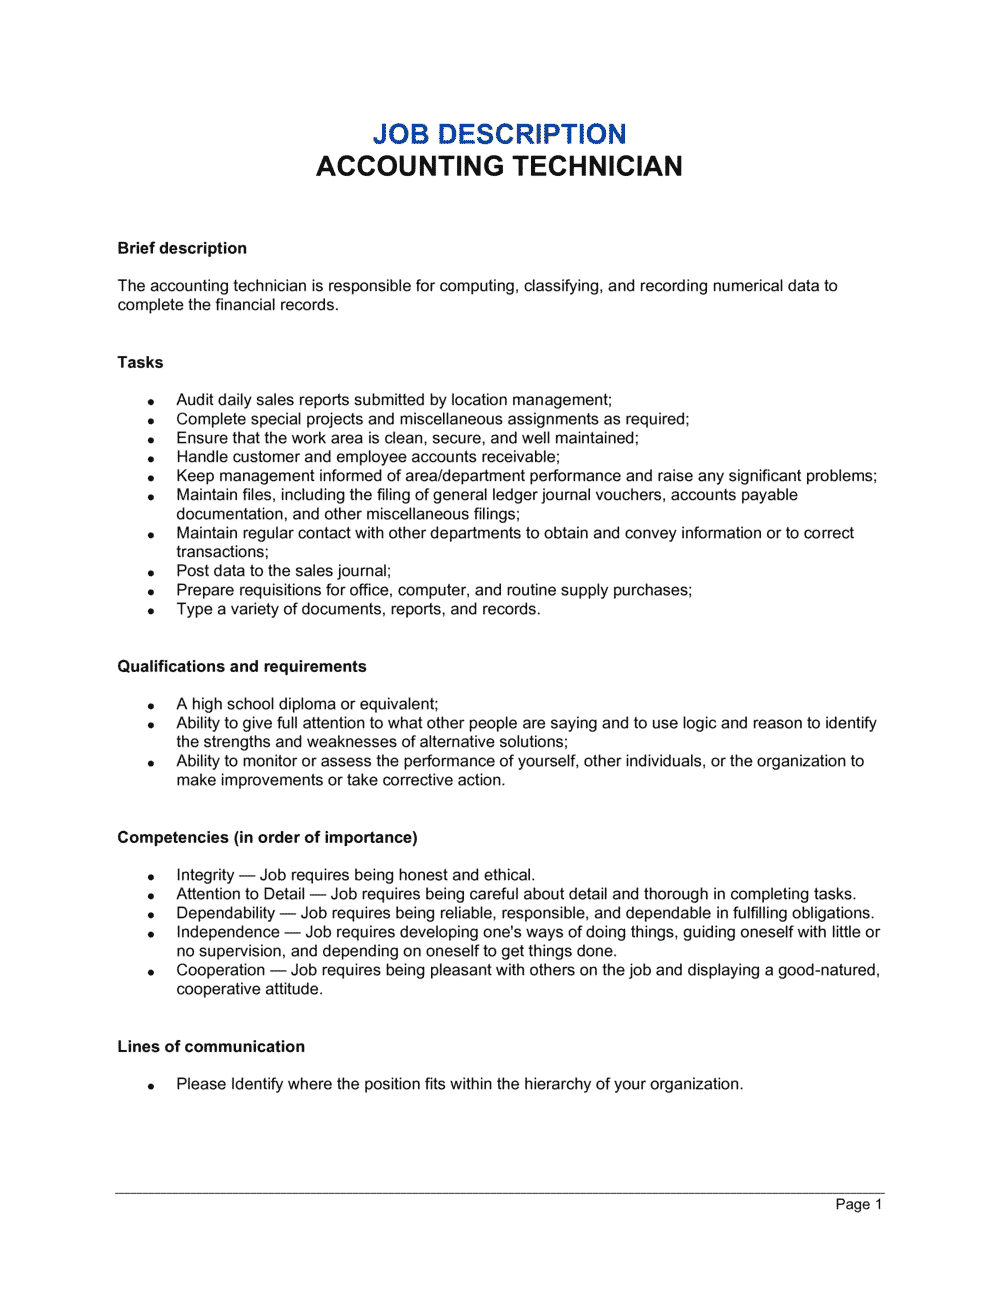 accounting-technician-job-responsibilities